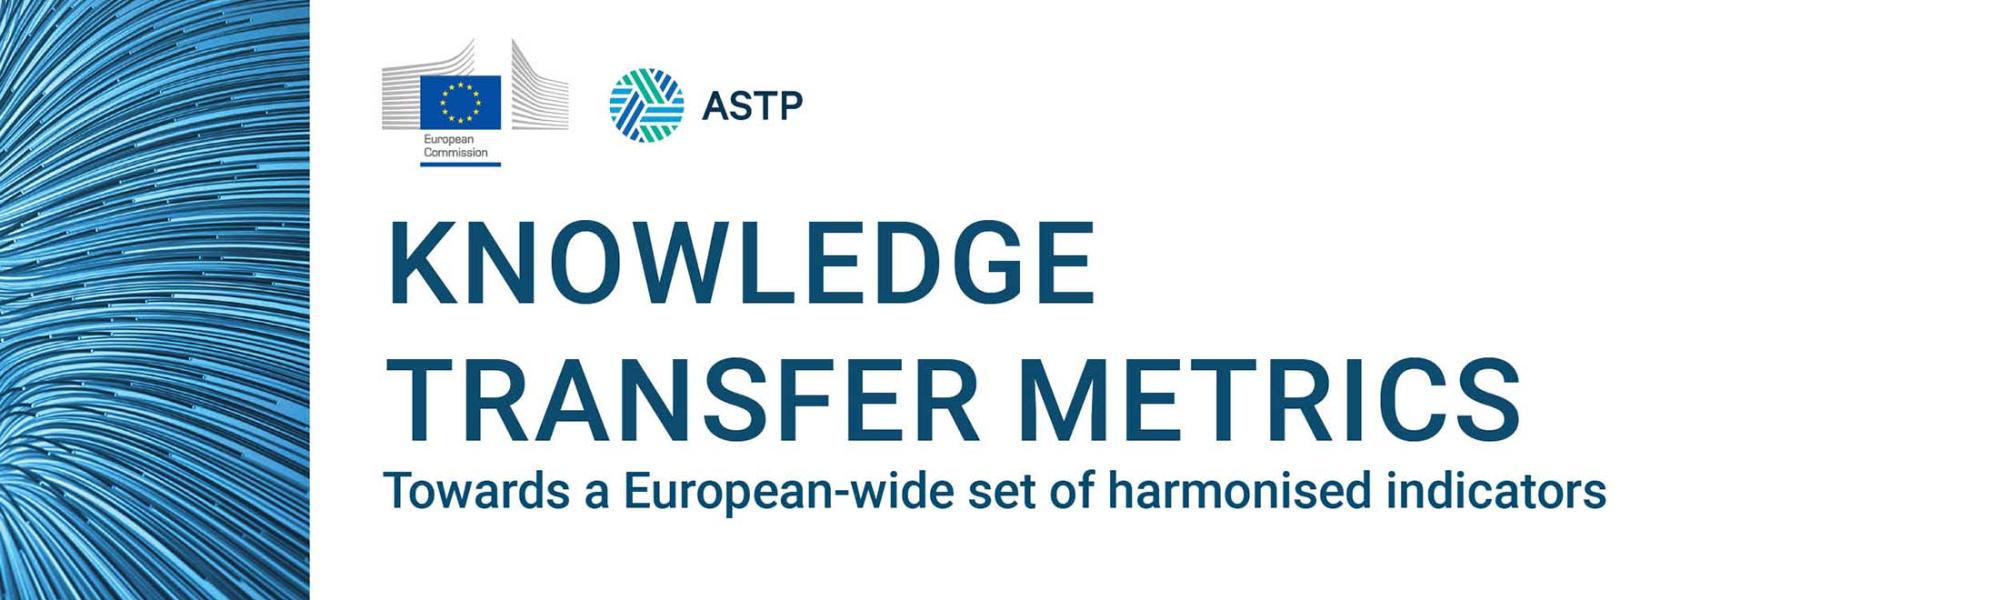 ASTP - Knowledge Transfer Metrics